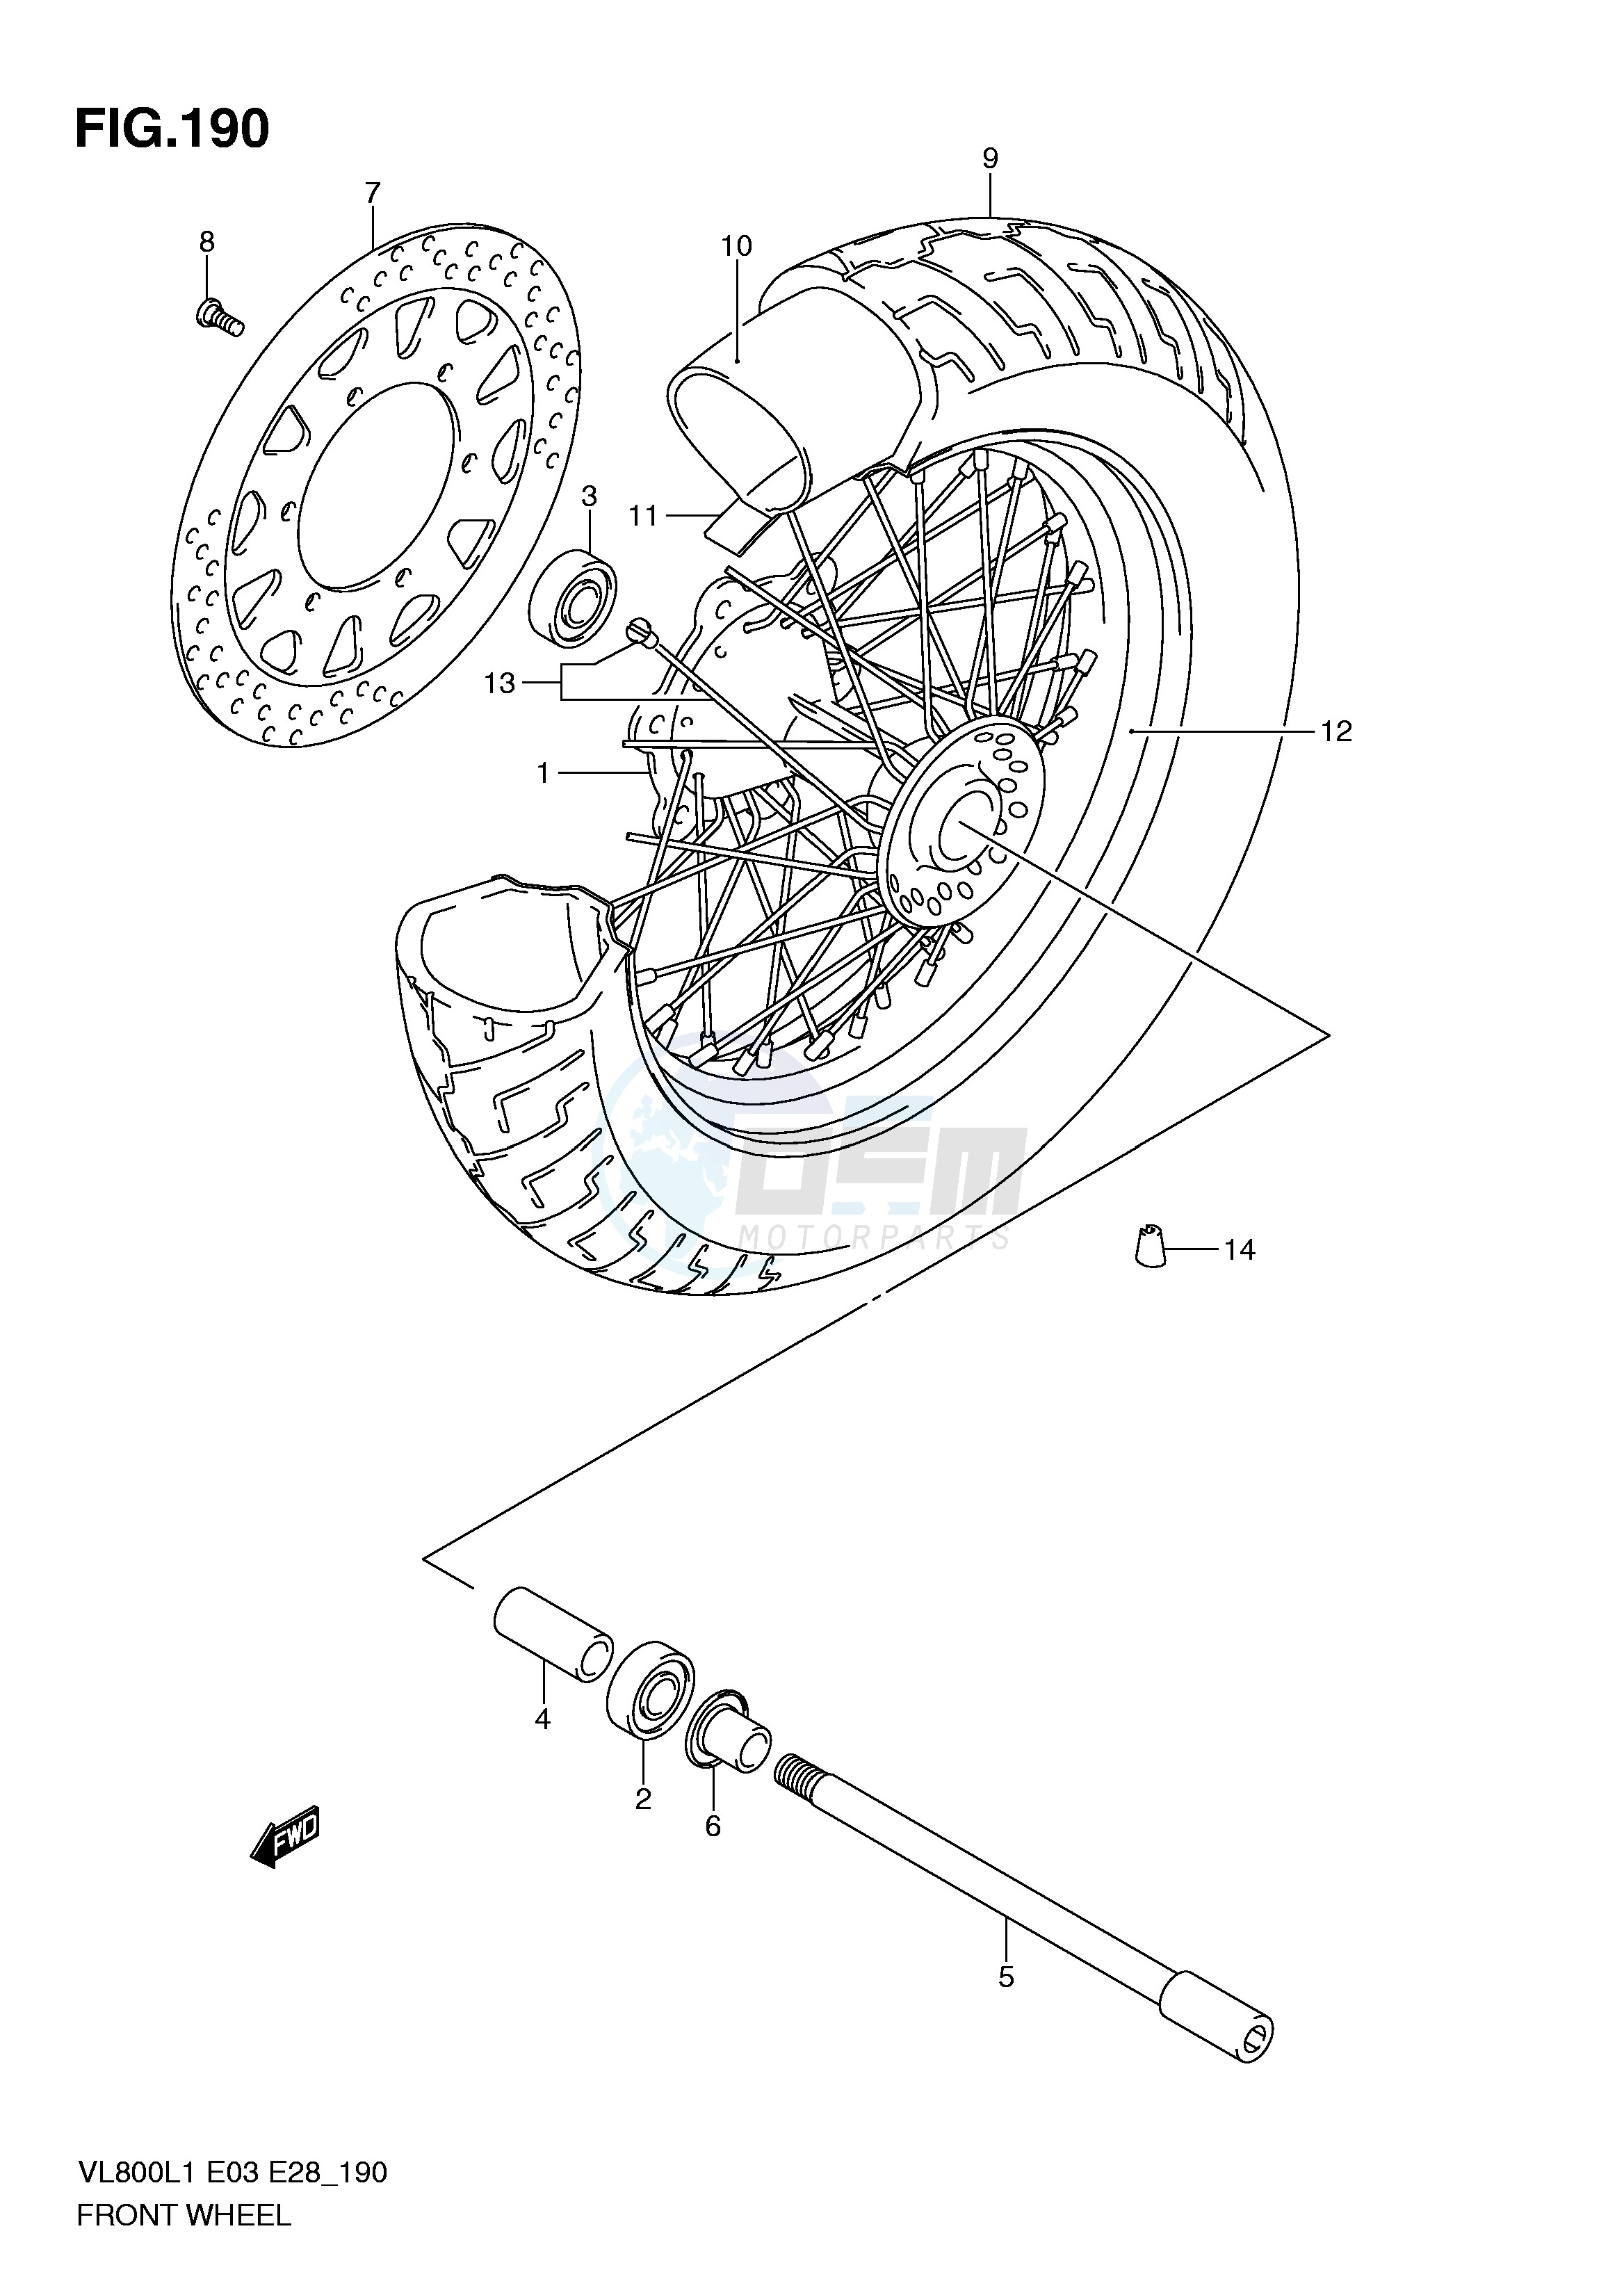 FRONT WHEEL (VL800TL1 E28) blueprint